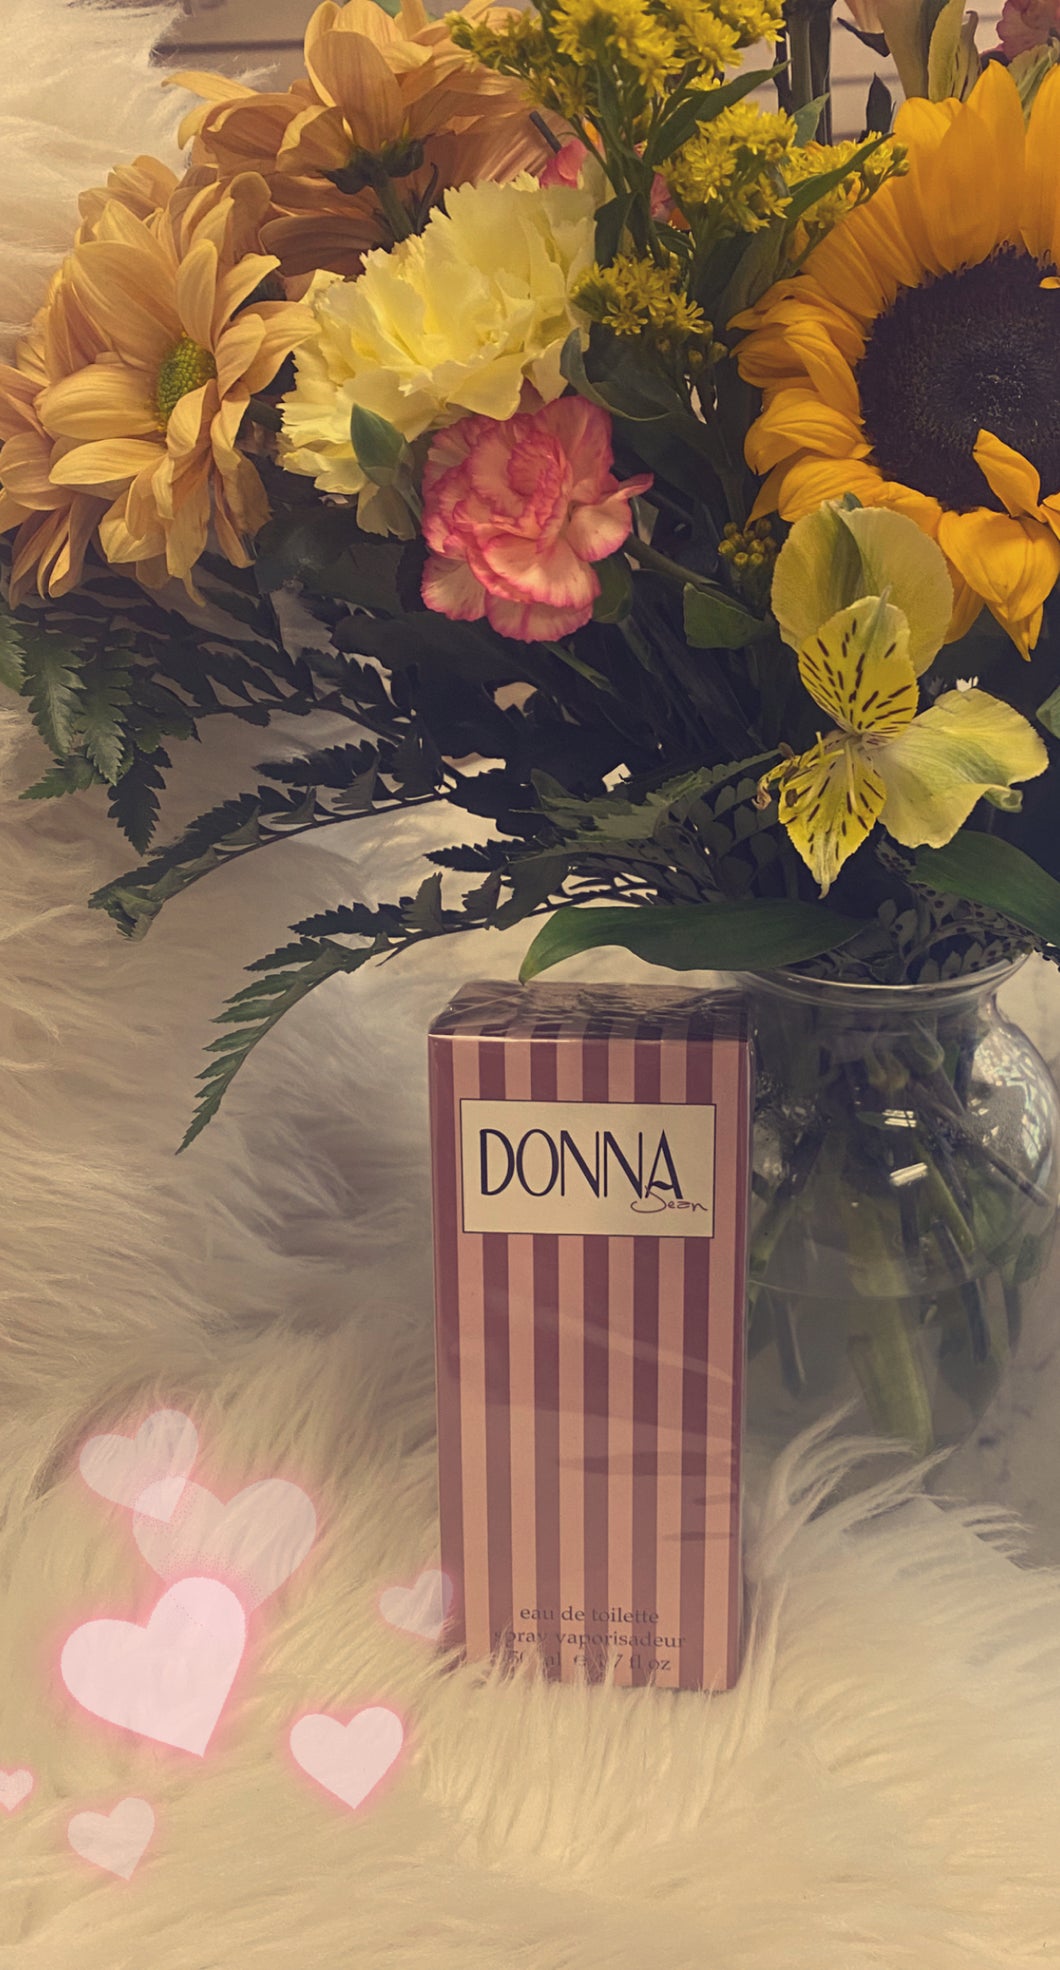 Donna Jean Perfume